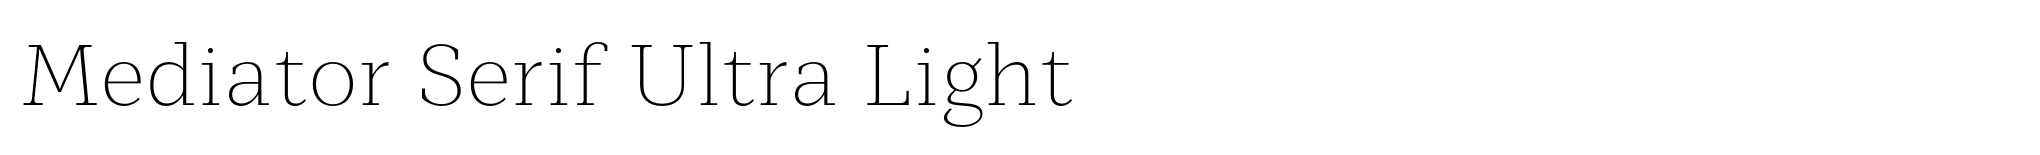 Mediator Serif Ultra Light image